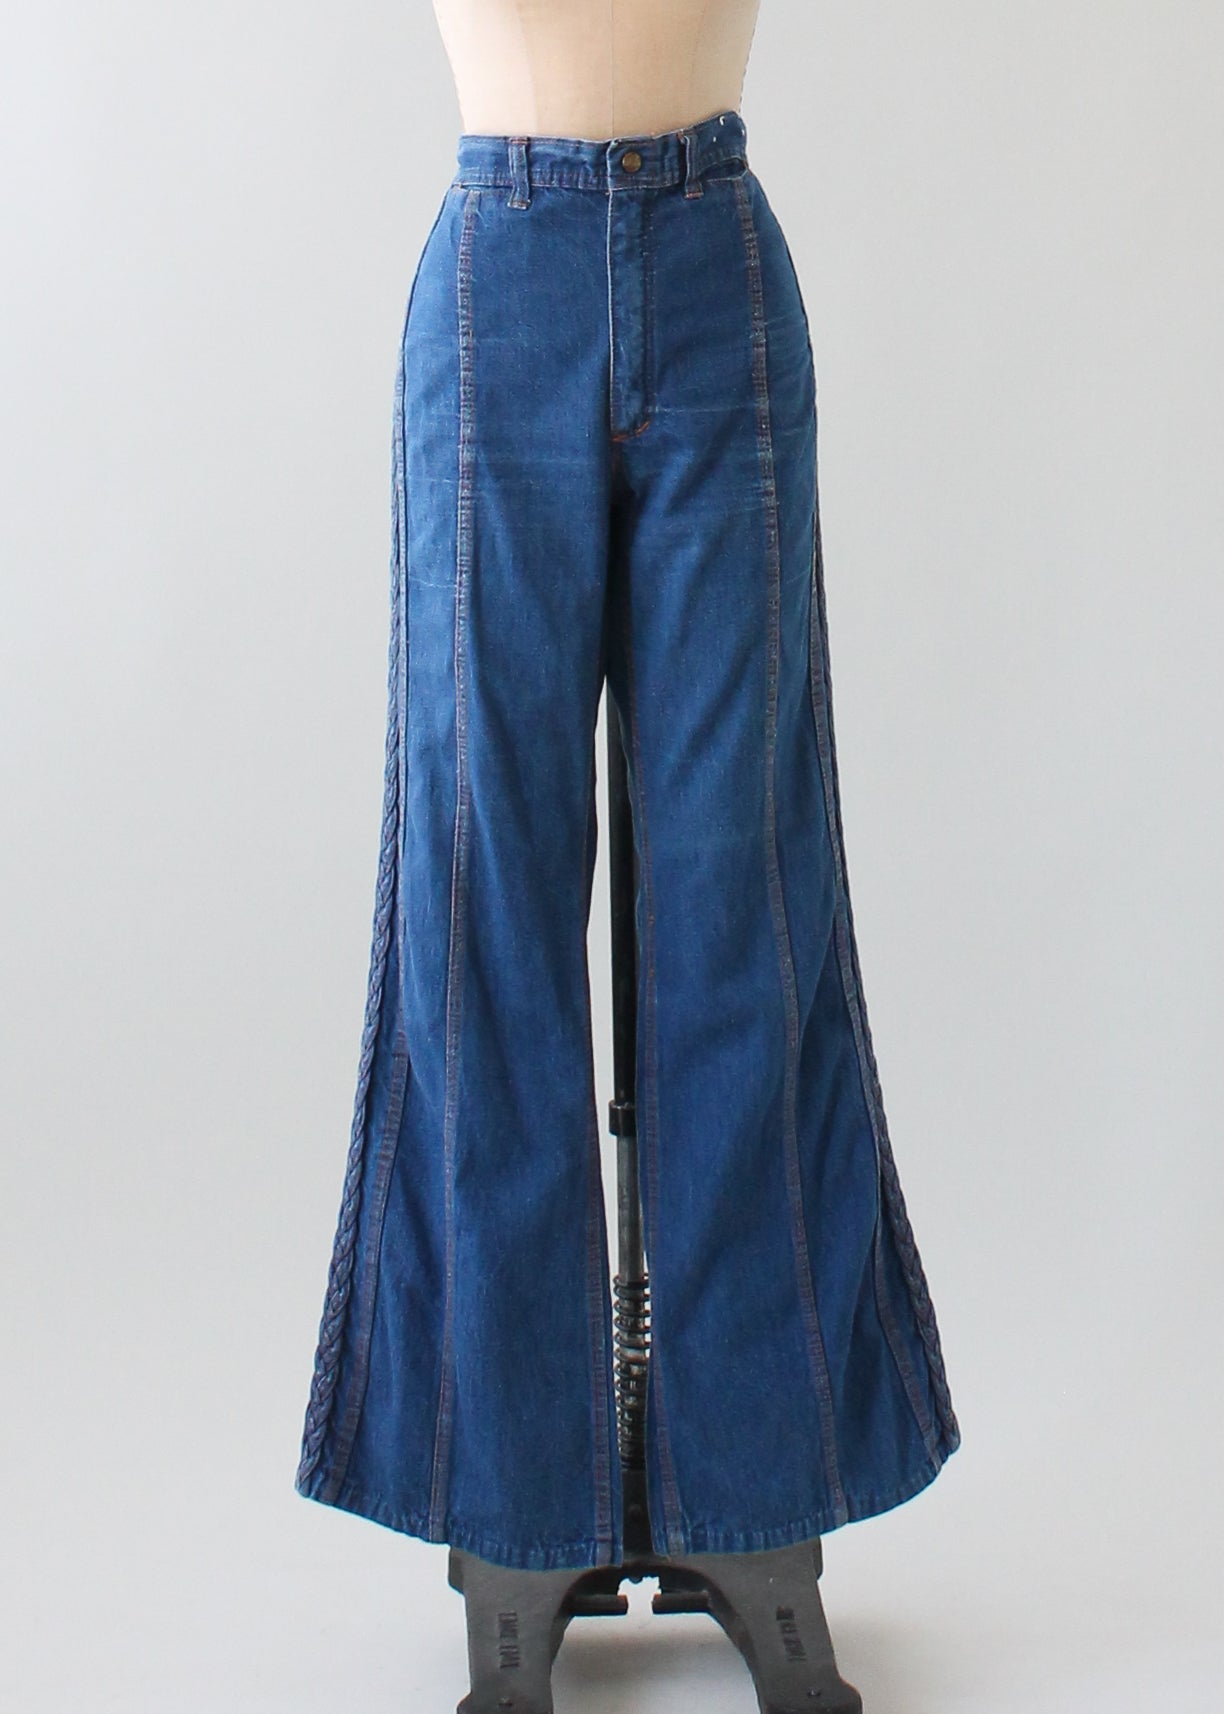 Vtg NOS 1970s Swaby's Navy Style Bell Bottom Jeans Denim High Waist 25.5 x  30.5